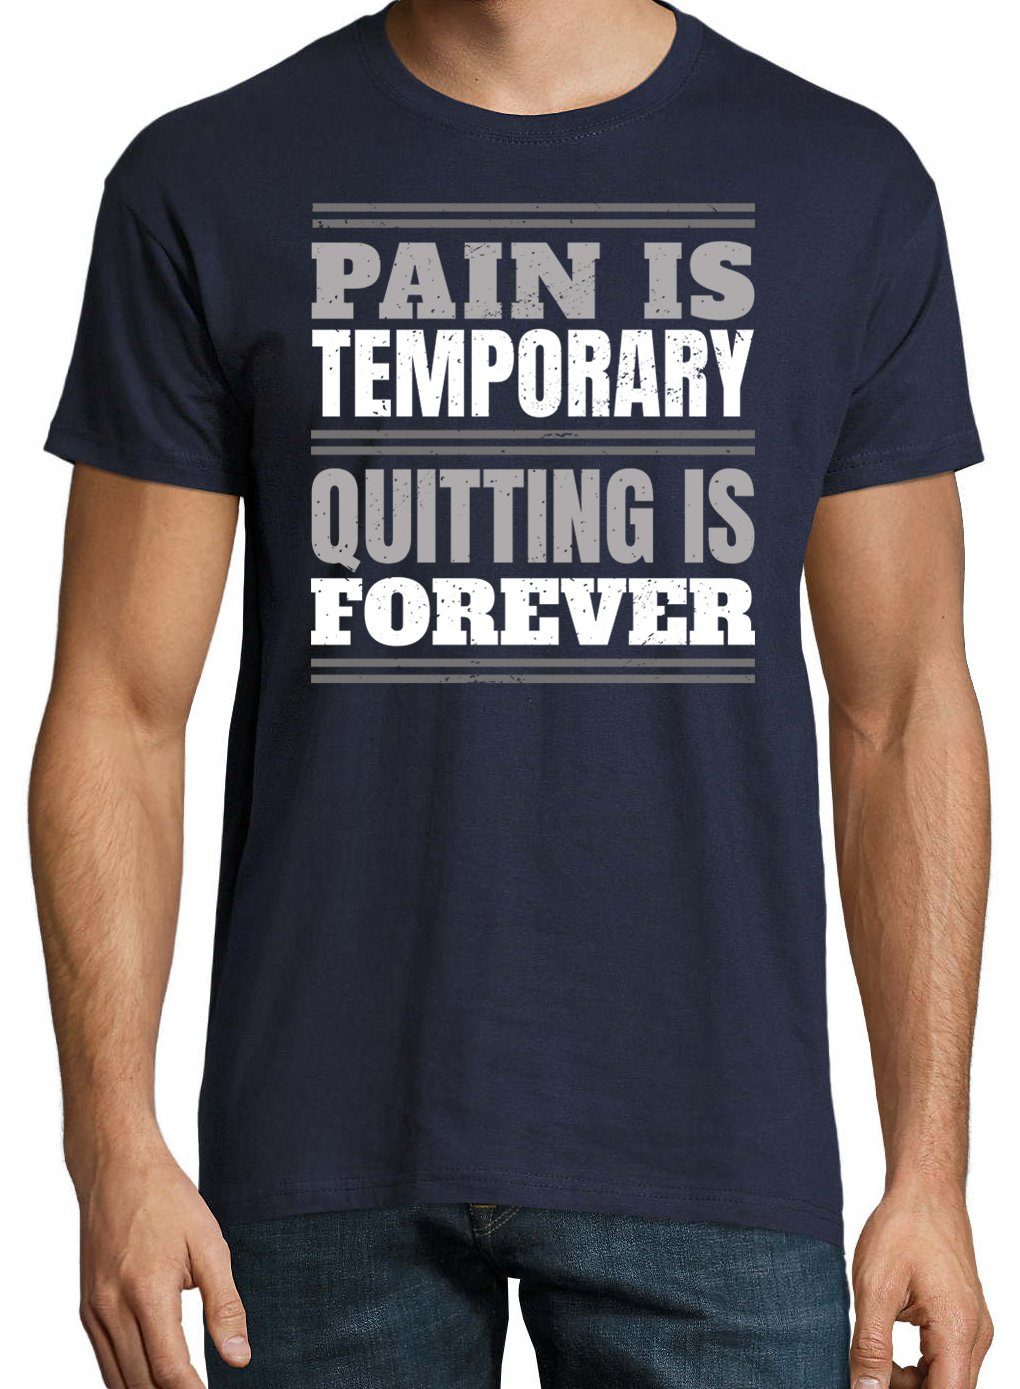 PAIN IS mit Navy Trendigem FOREVER! Shirt TEMPORARY, T-Shirt QUITTING Youth IS Designz Herren Frontdruck